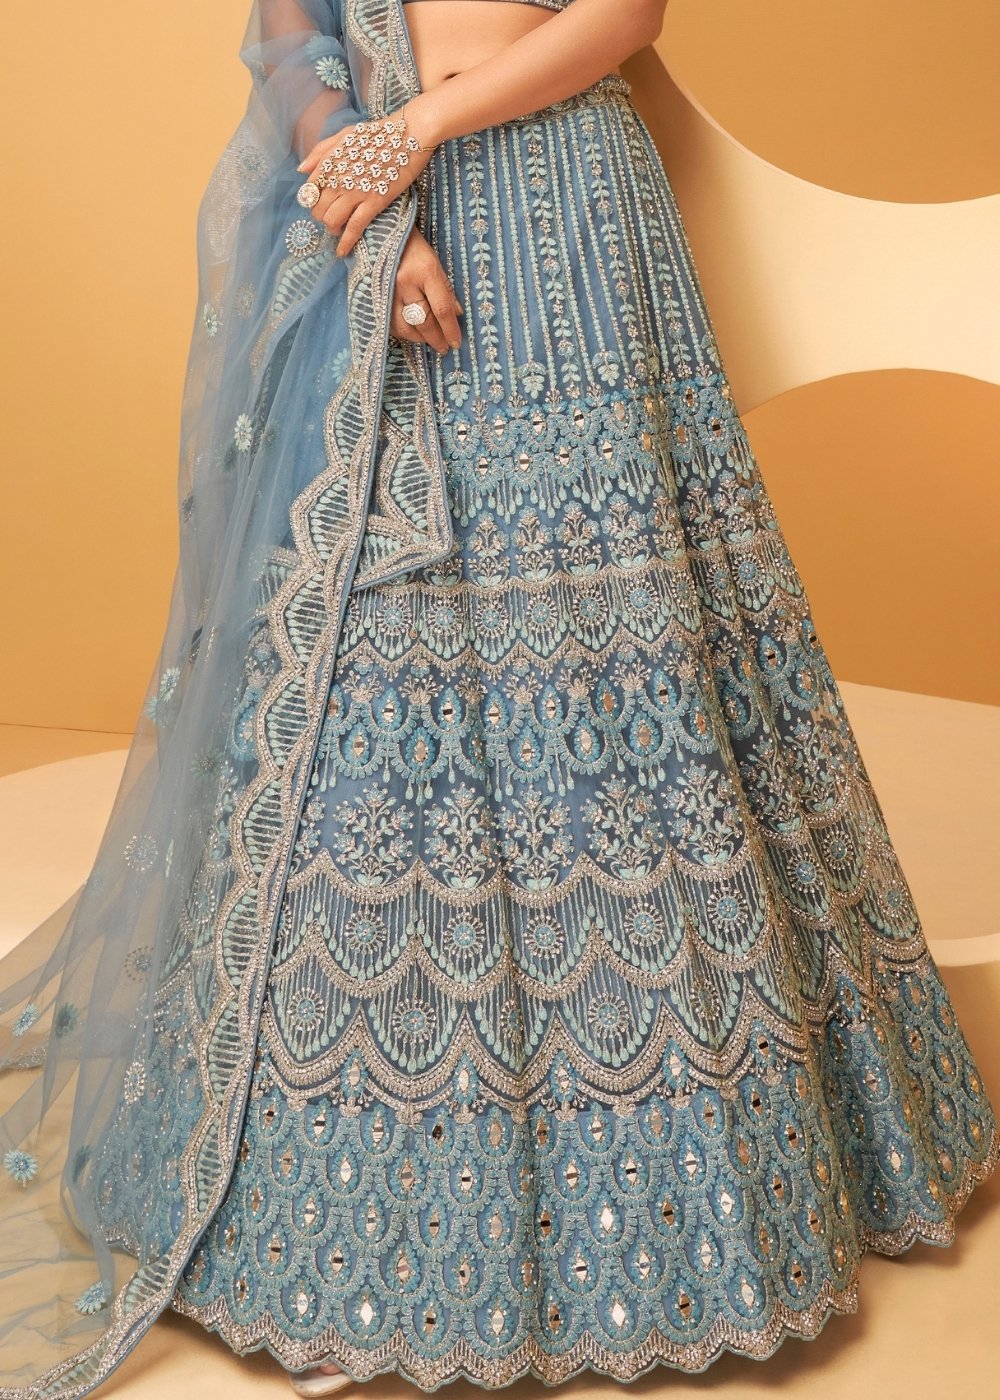 Steel Blue Net Lehenga Choli with Floral Cording, Sequins, Mirror & Thread work